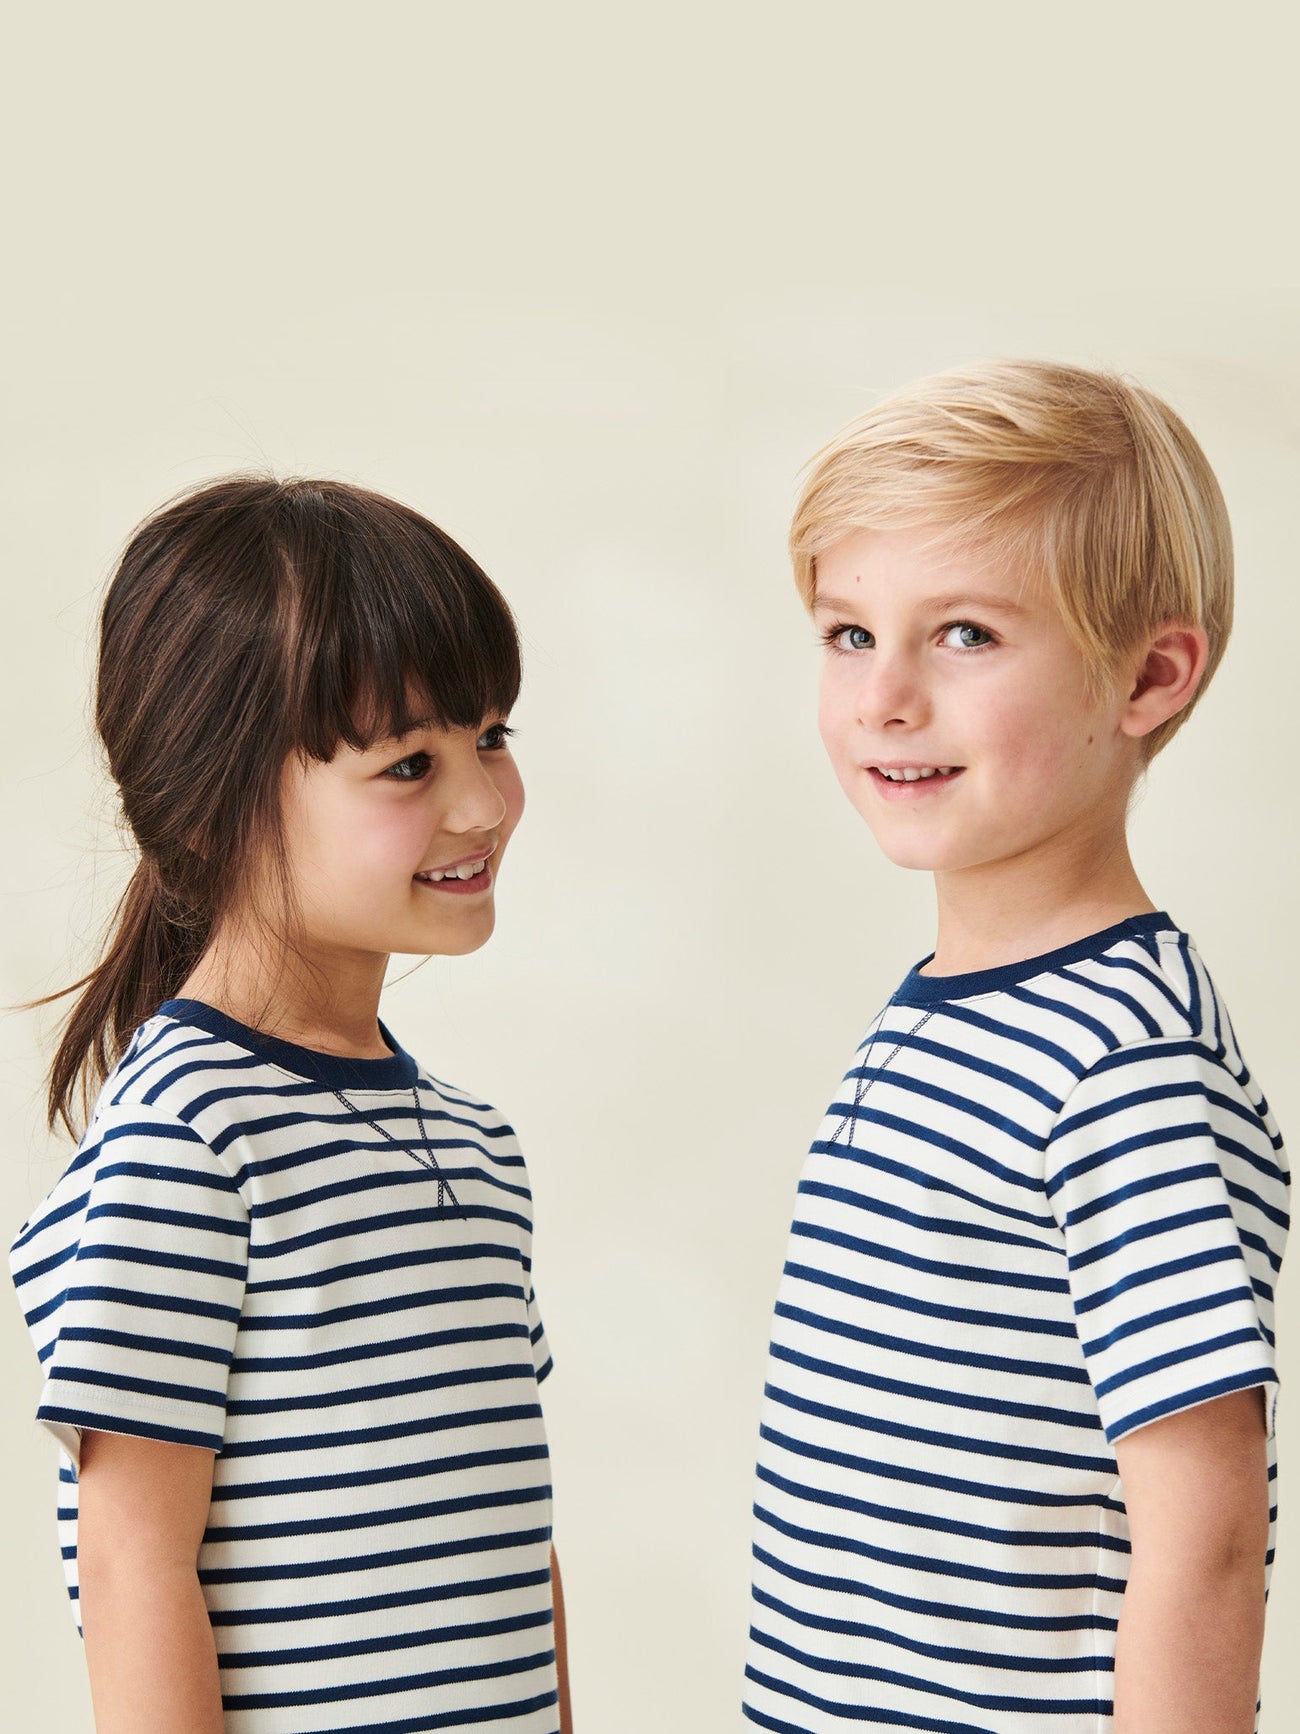 Navy Stripe Arturo Kids Cotton T-Shirt